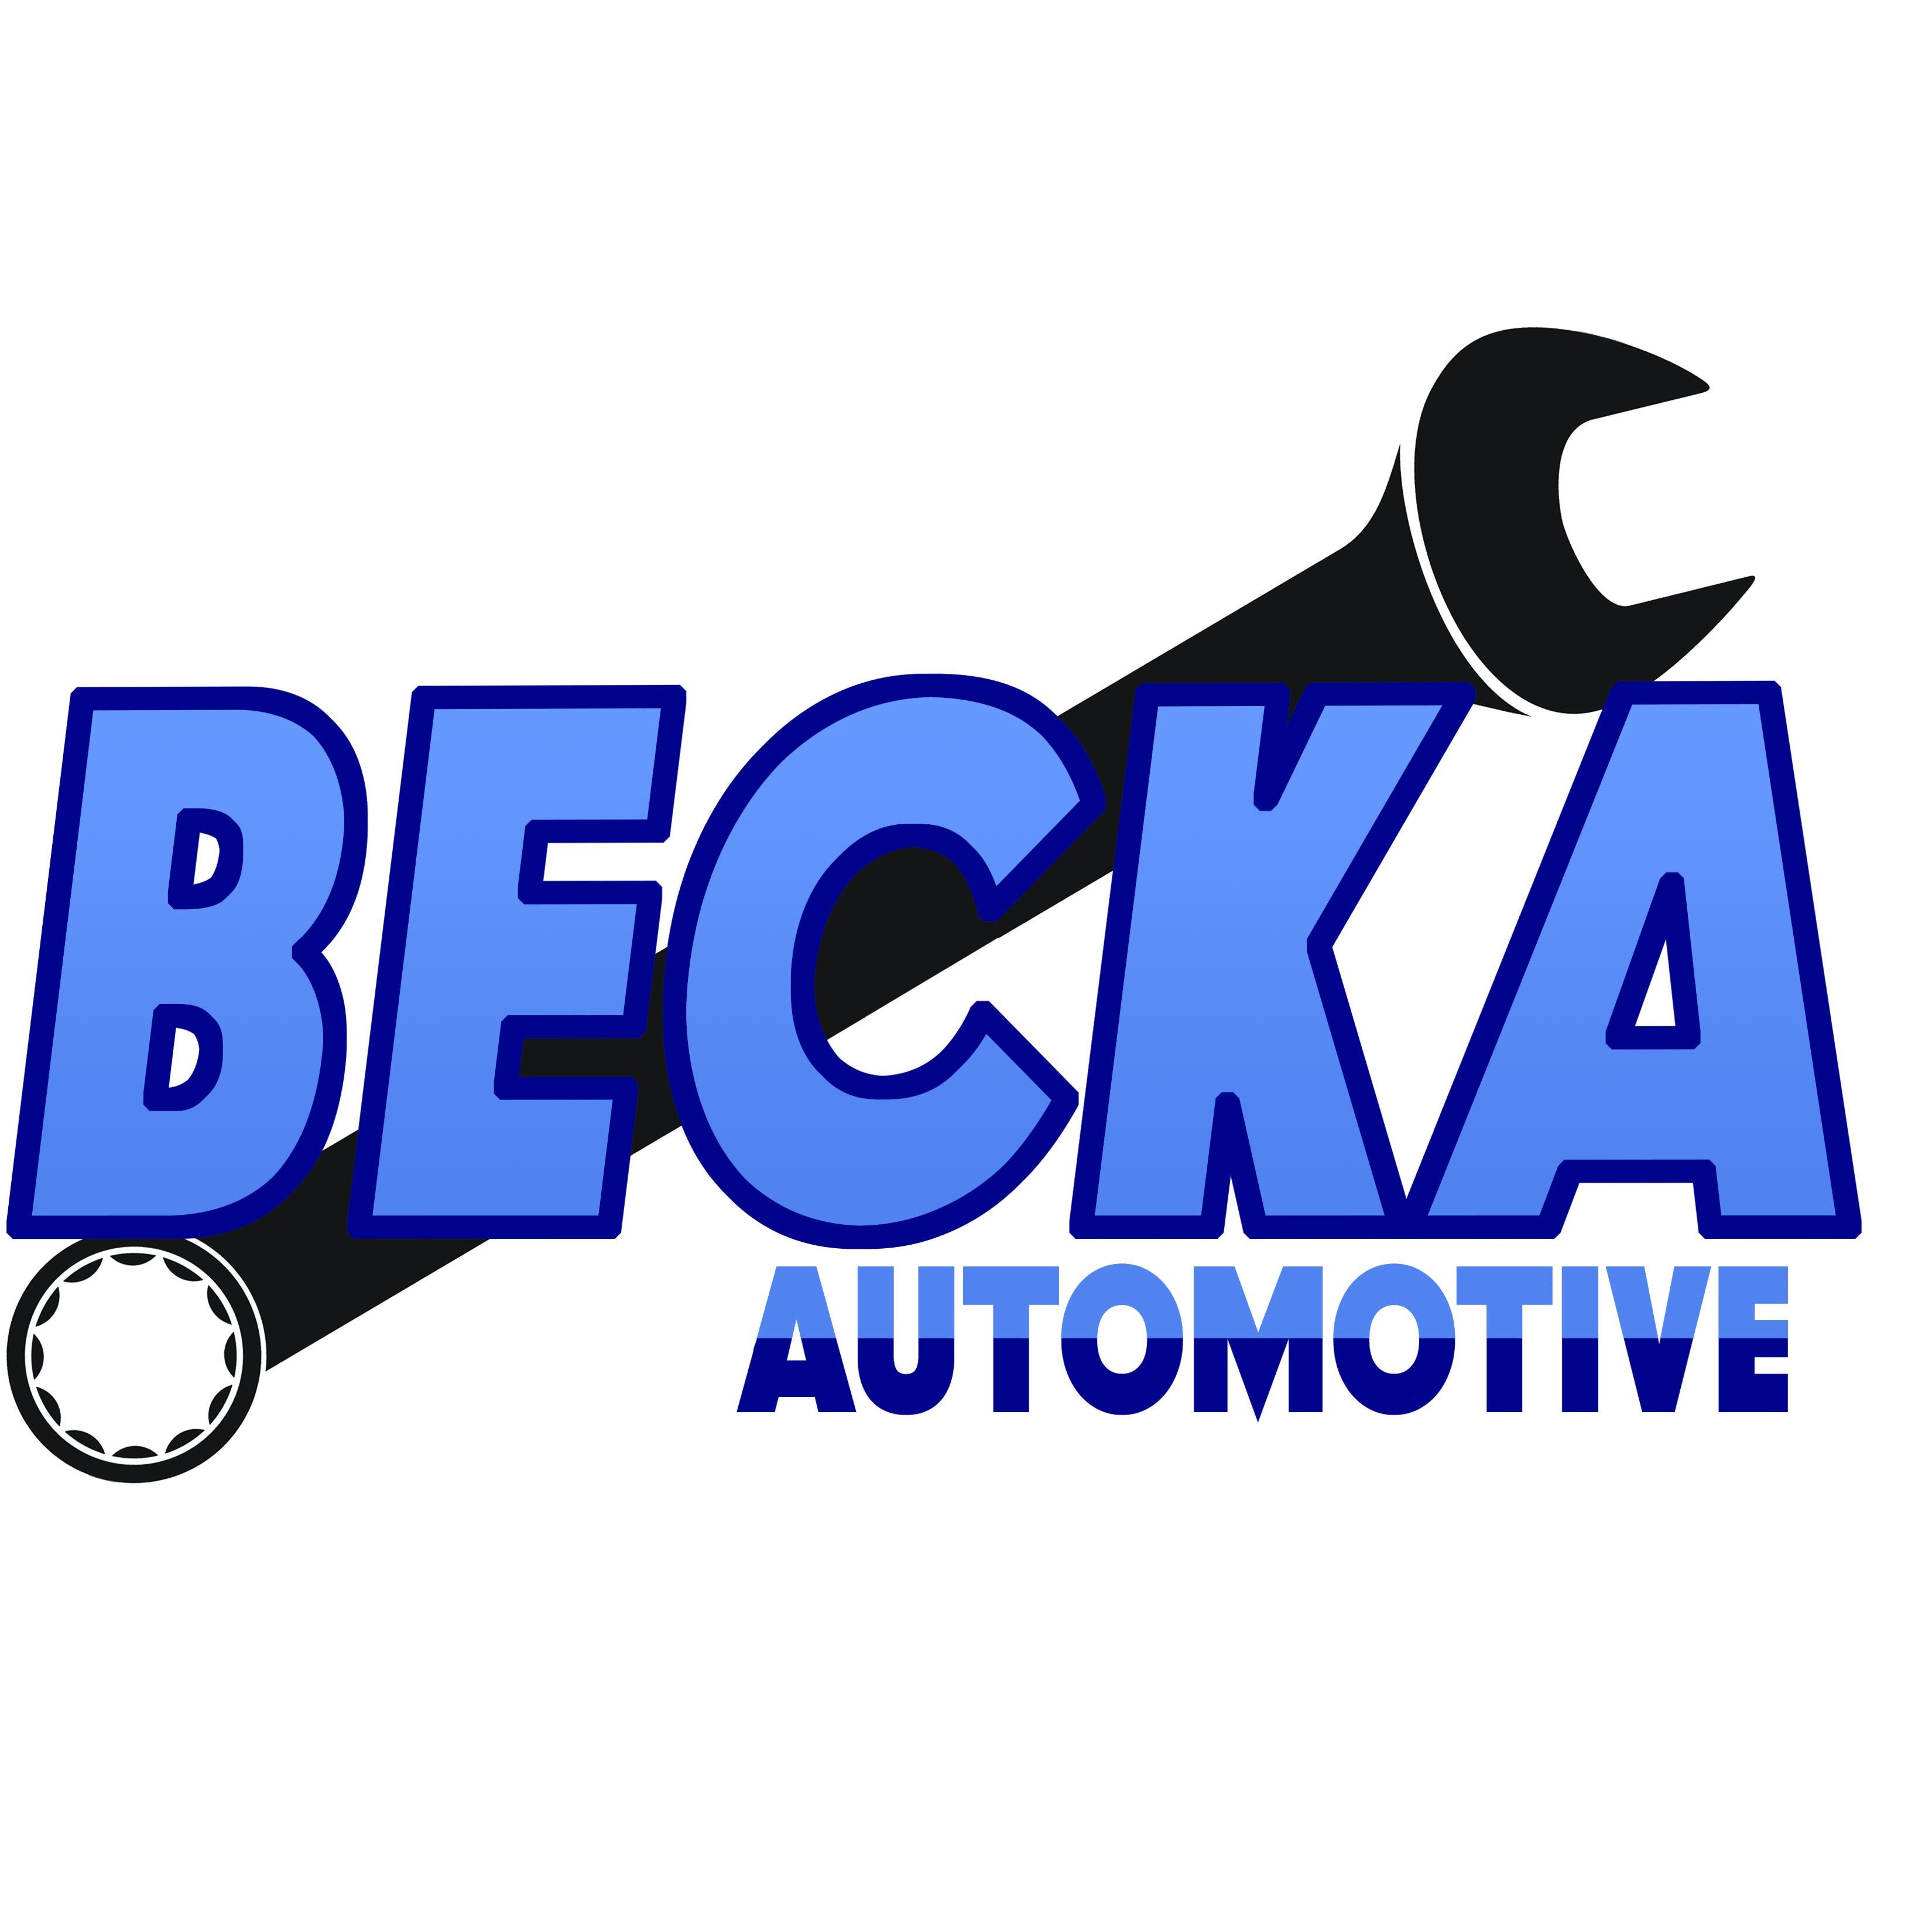 Becka Automotive Photo